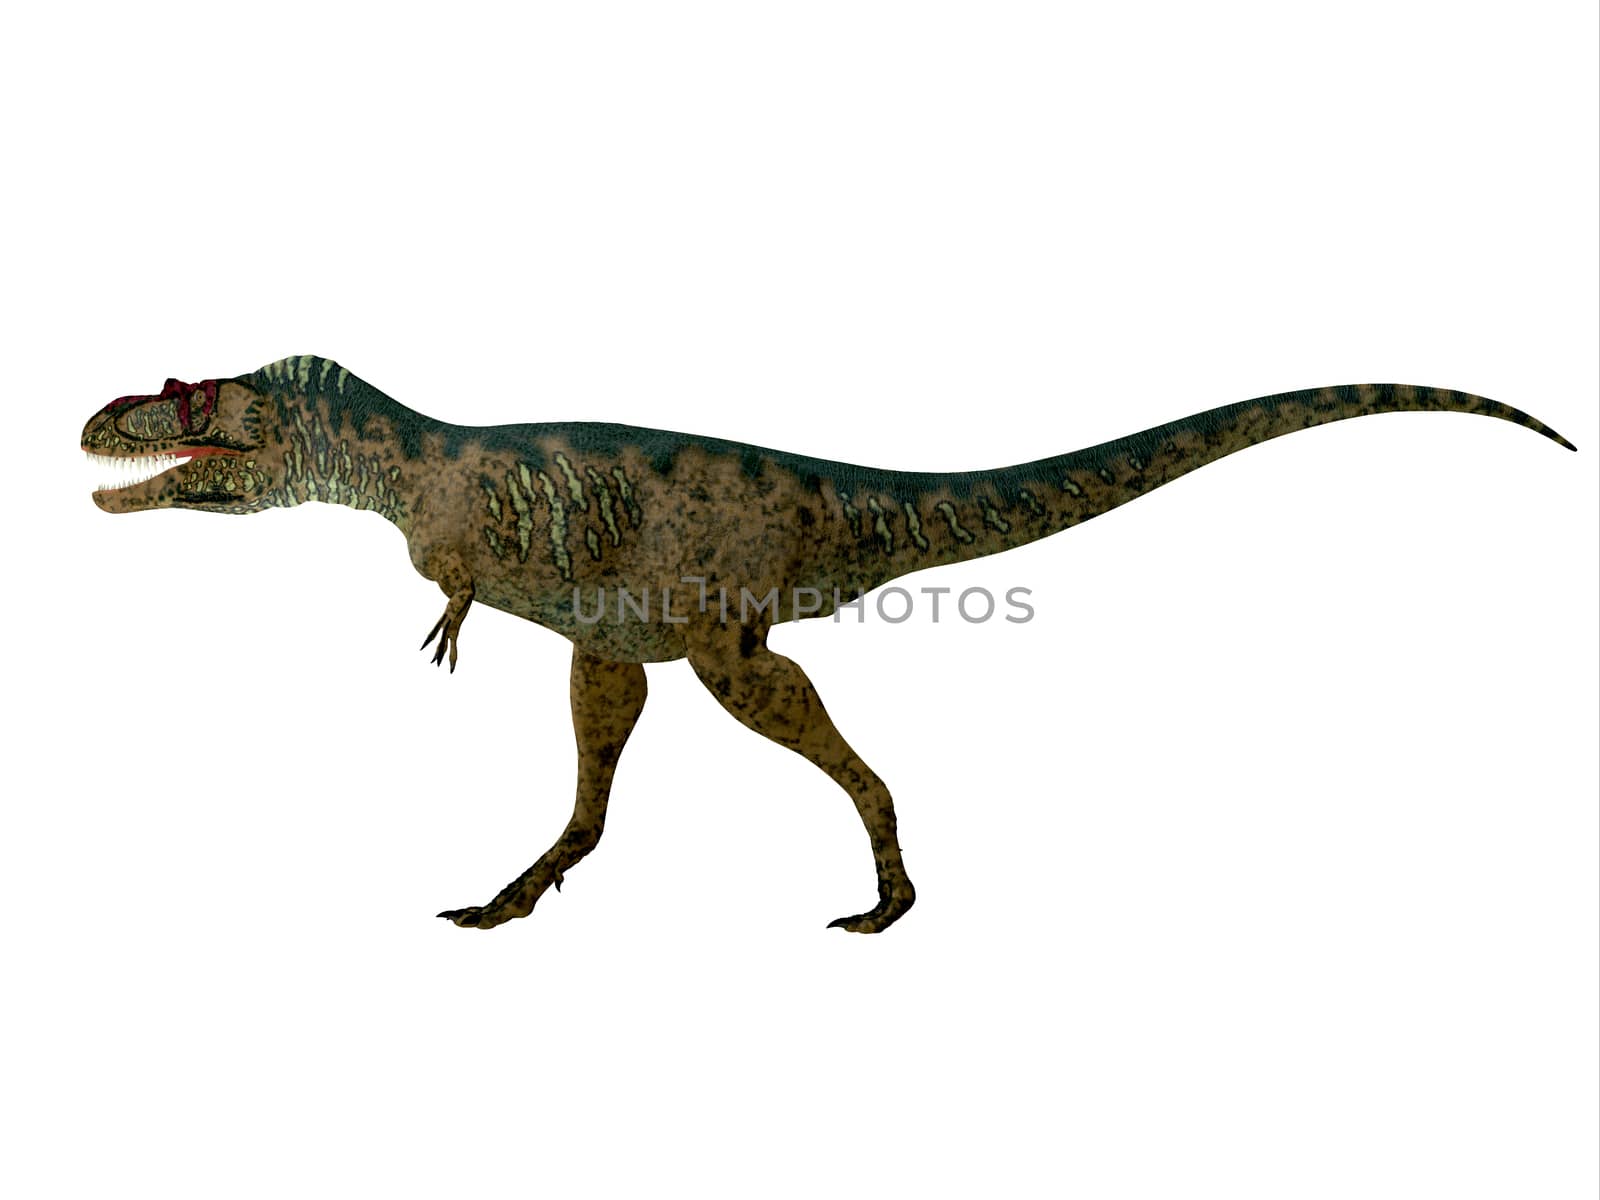 Albertosaurus Dinosaur Side Profile by Catmando